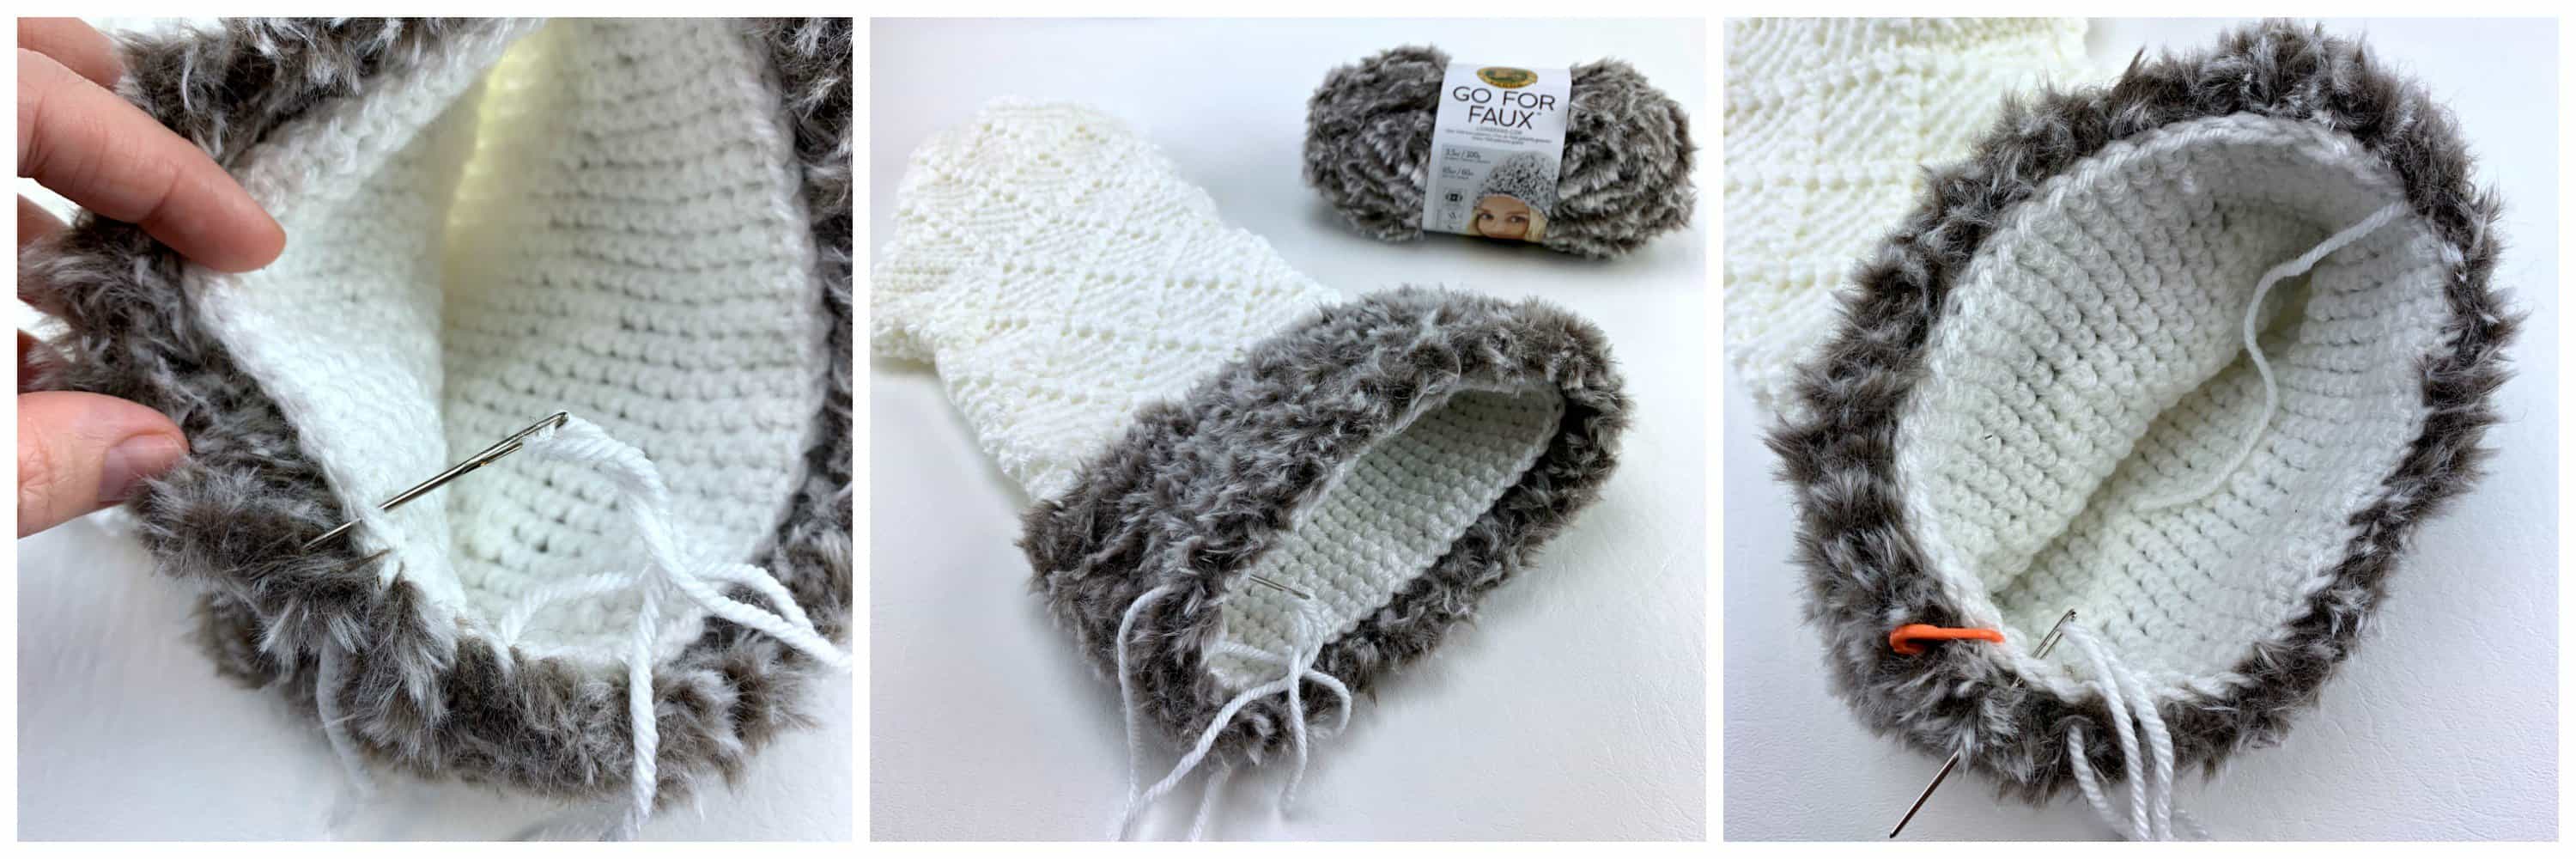 faux fur crochet cuff being sewn onto crochet stocking